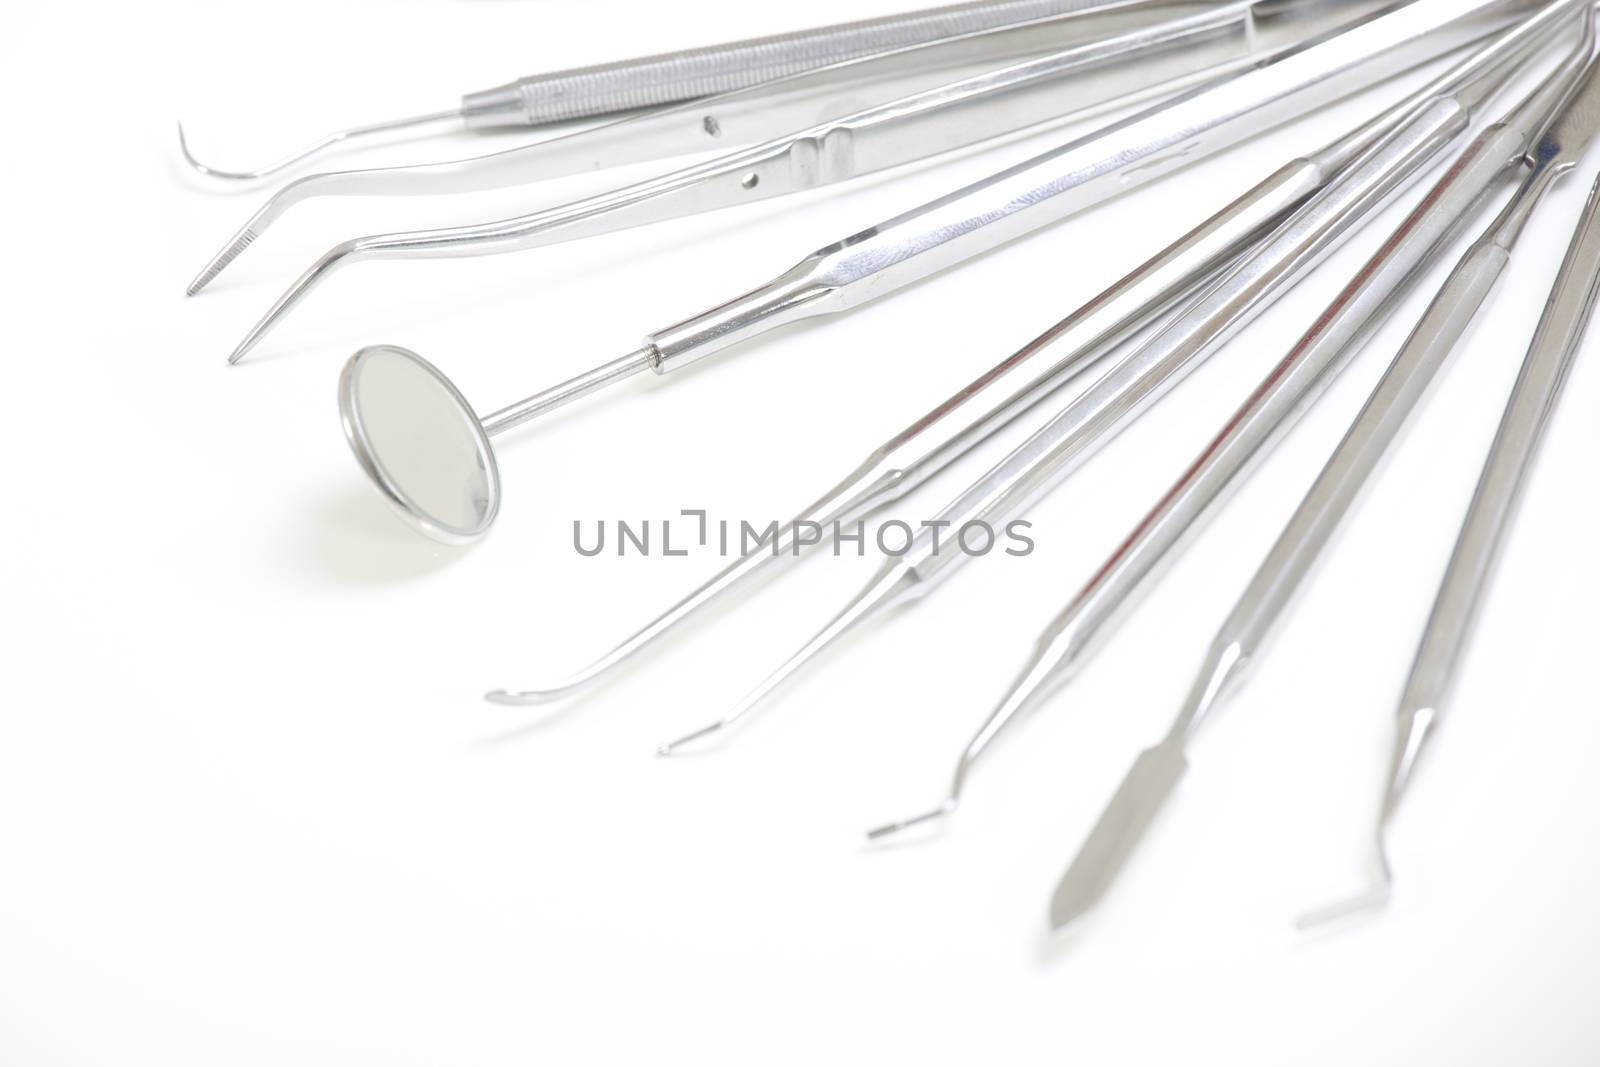 Set of metal medical equipment tools for teeth dental care by senkaya